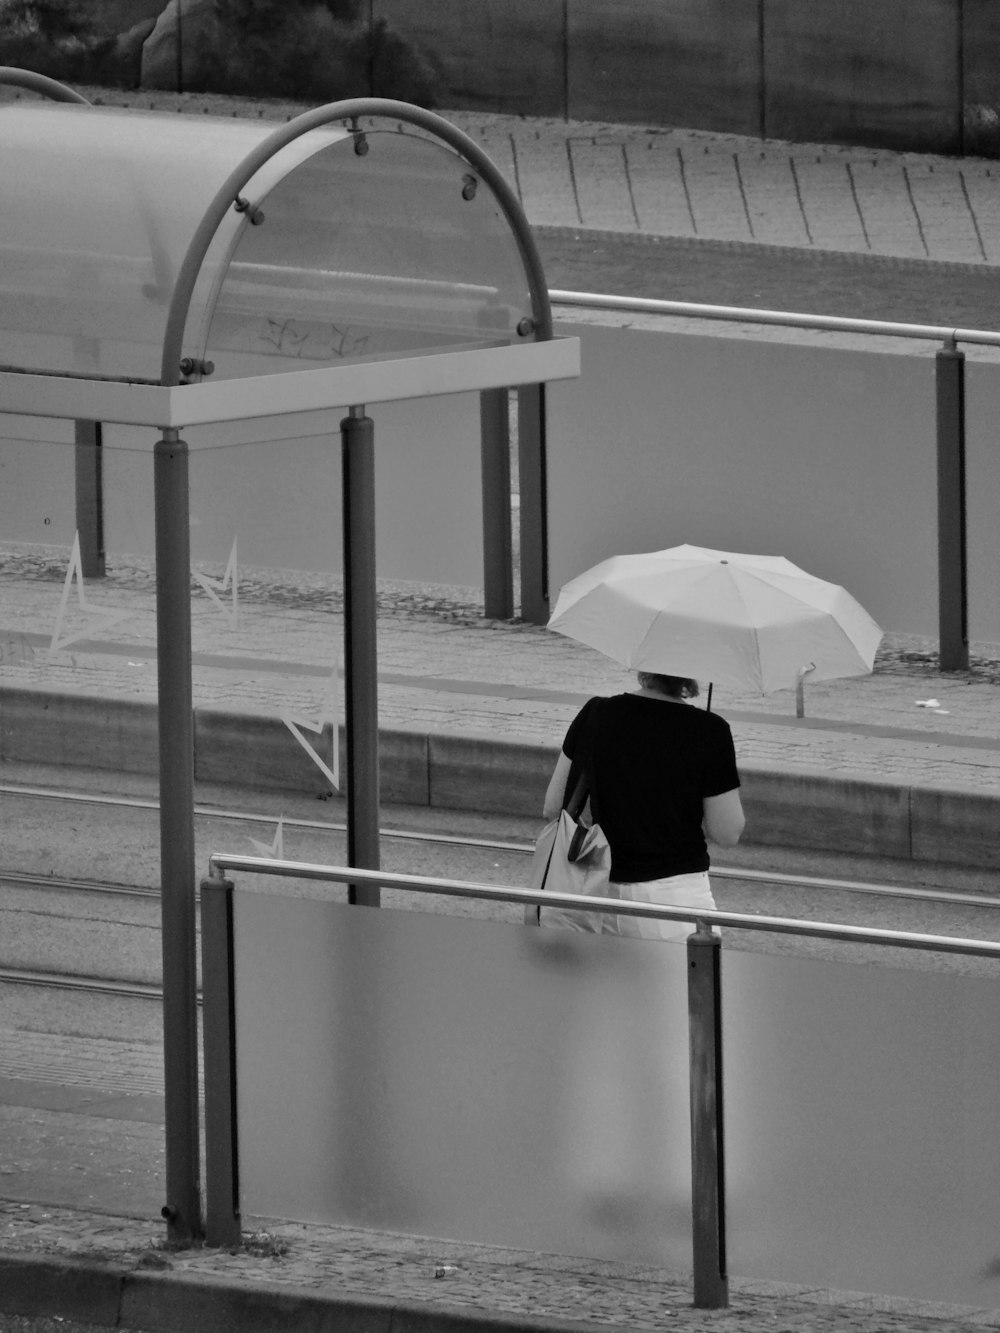 grayscale photo of person holding umbrella walking on sidewalk